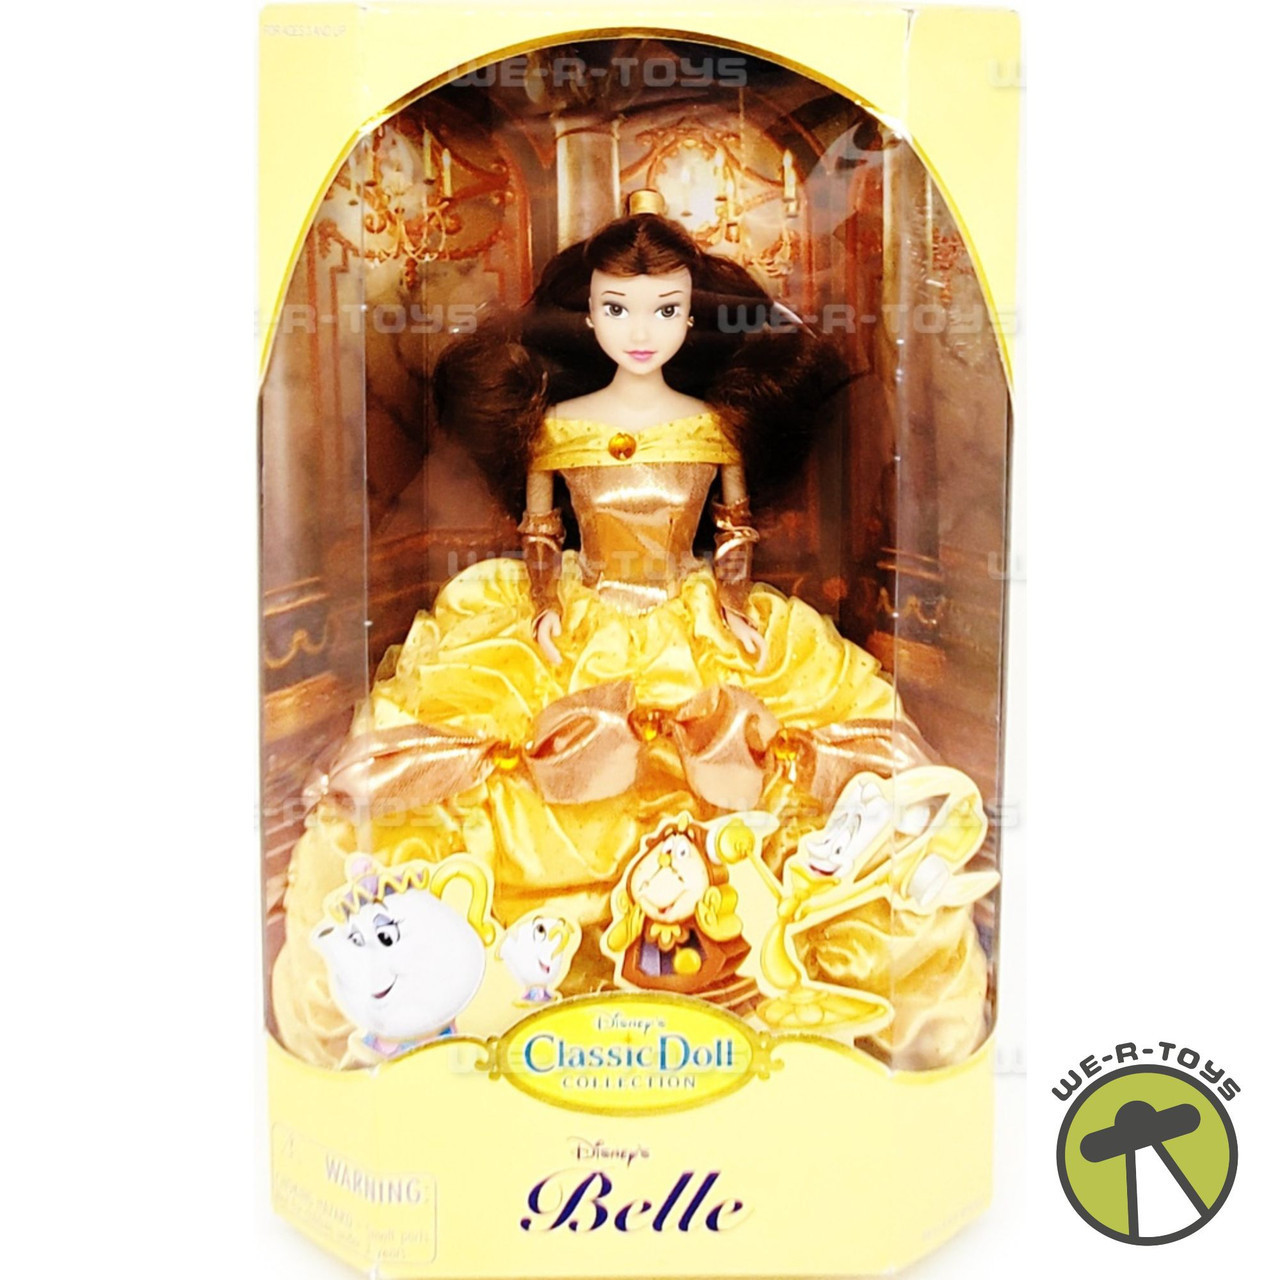 Disney Princess Belle Fashion Doll with Brown Hair, Brown Eyes